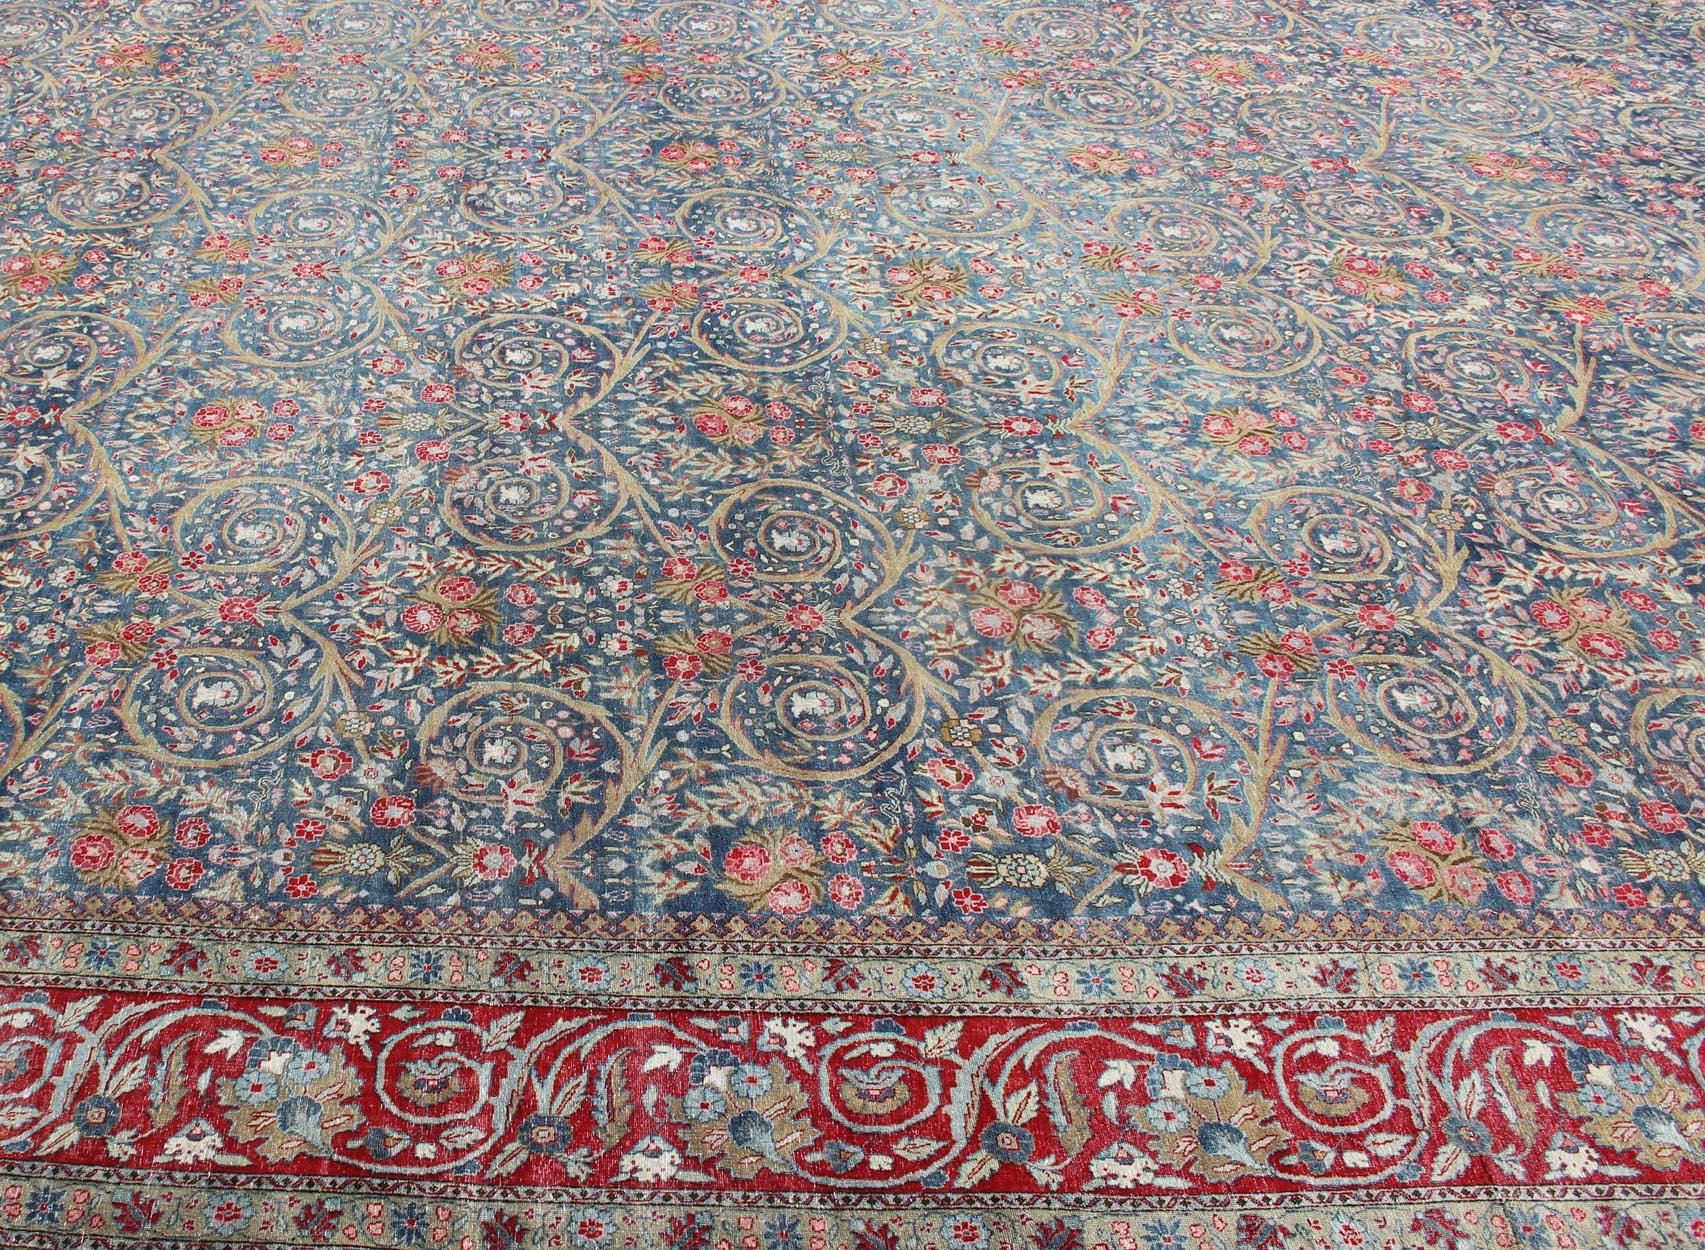 Large Antique Persian Tabriz Rug in Vine Scroll Design in Blue Background, Red For Sale 8